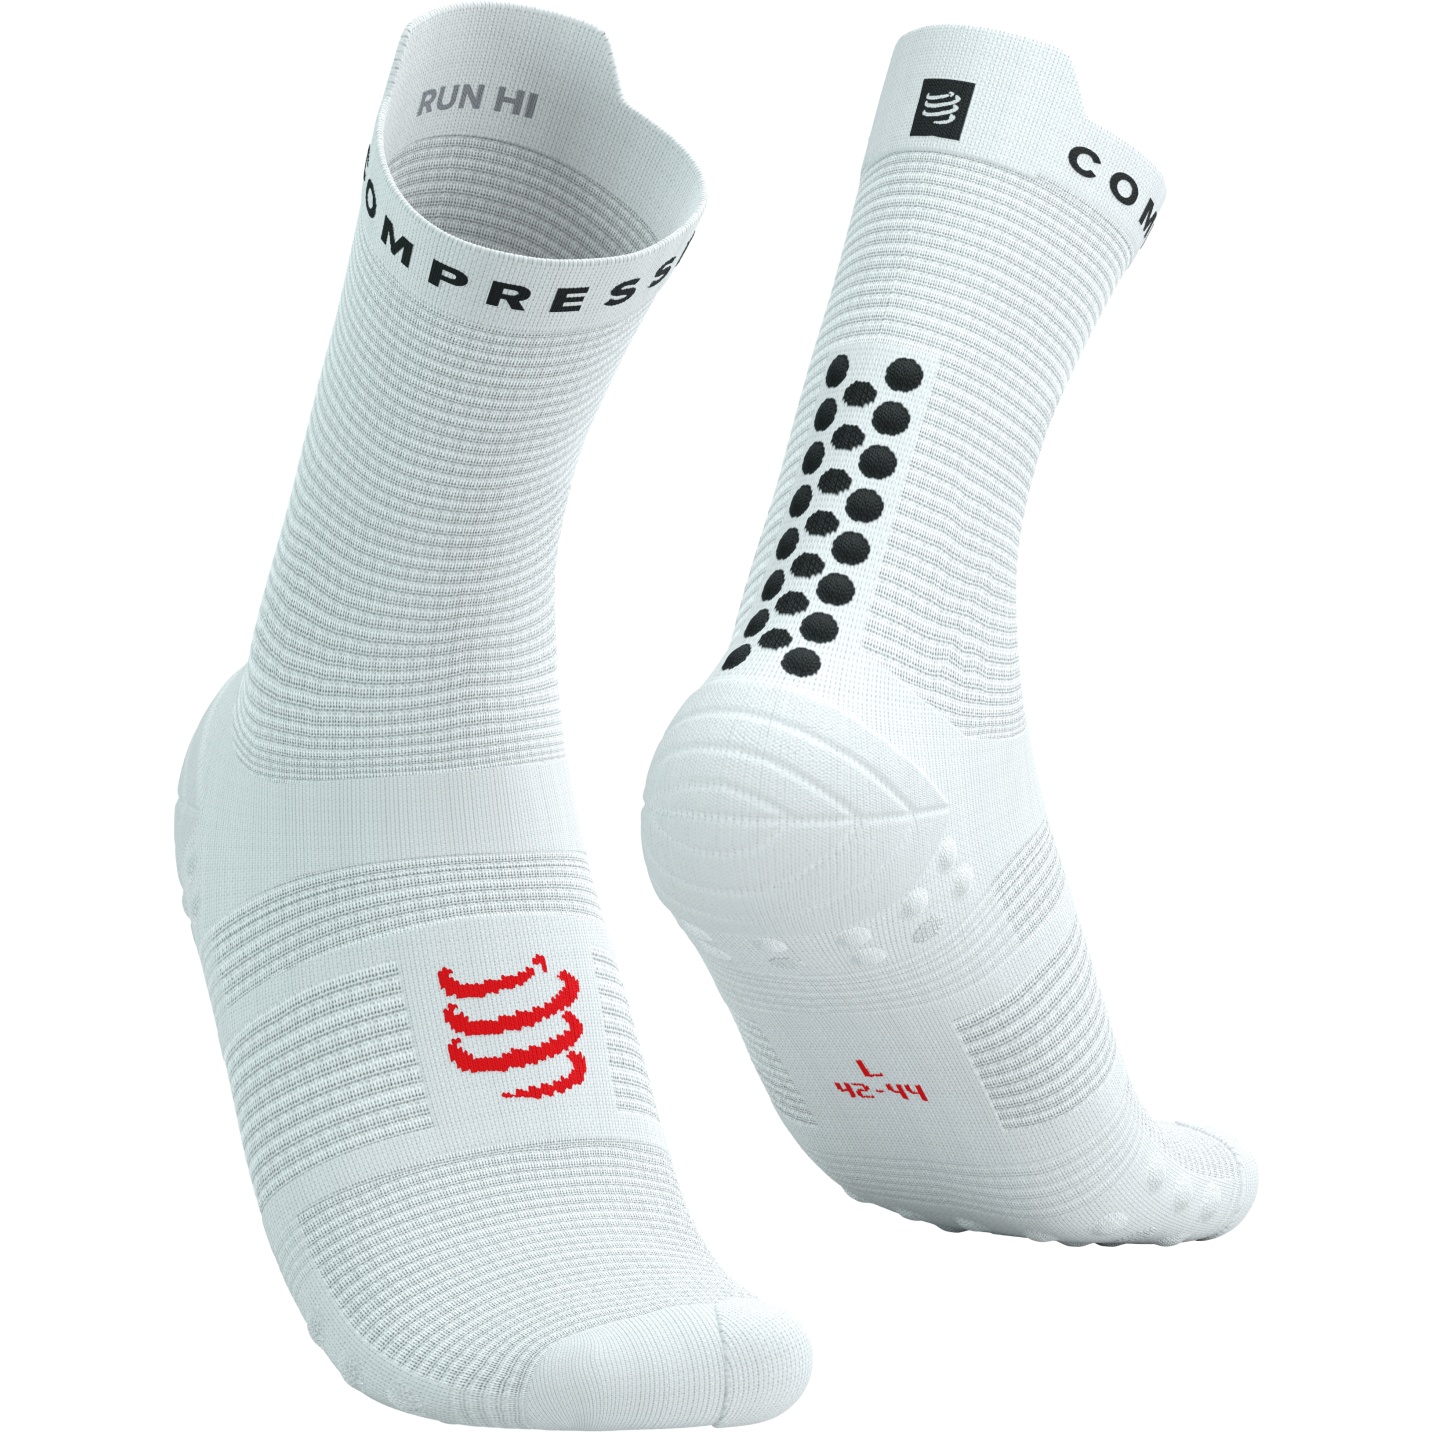 Picture of Compressport Pro Racing Compression Socks v4.0 Run High - white/black/core red